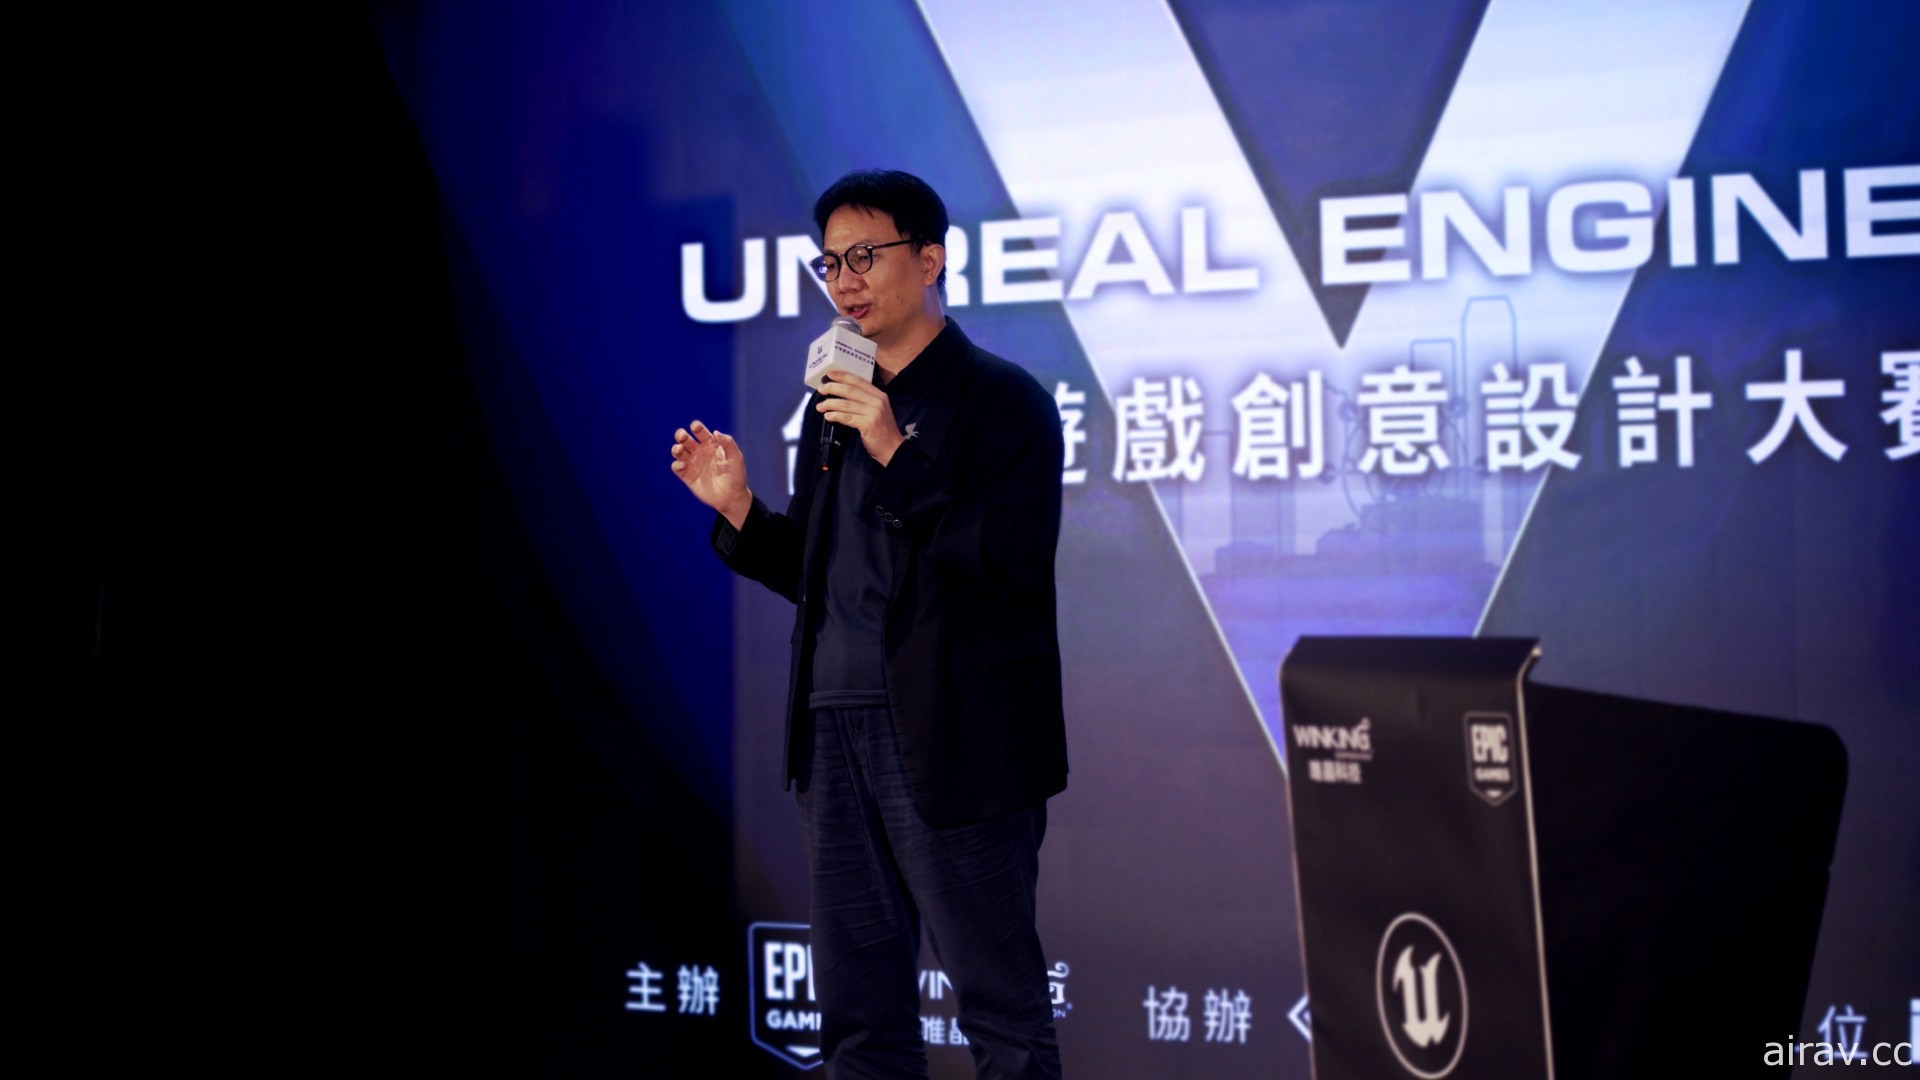 「Unreal Engine 5 台灣遊戲創意設計大賽」今日起開放報名